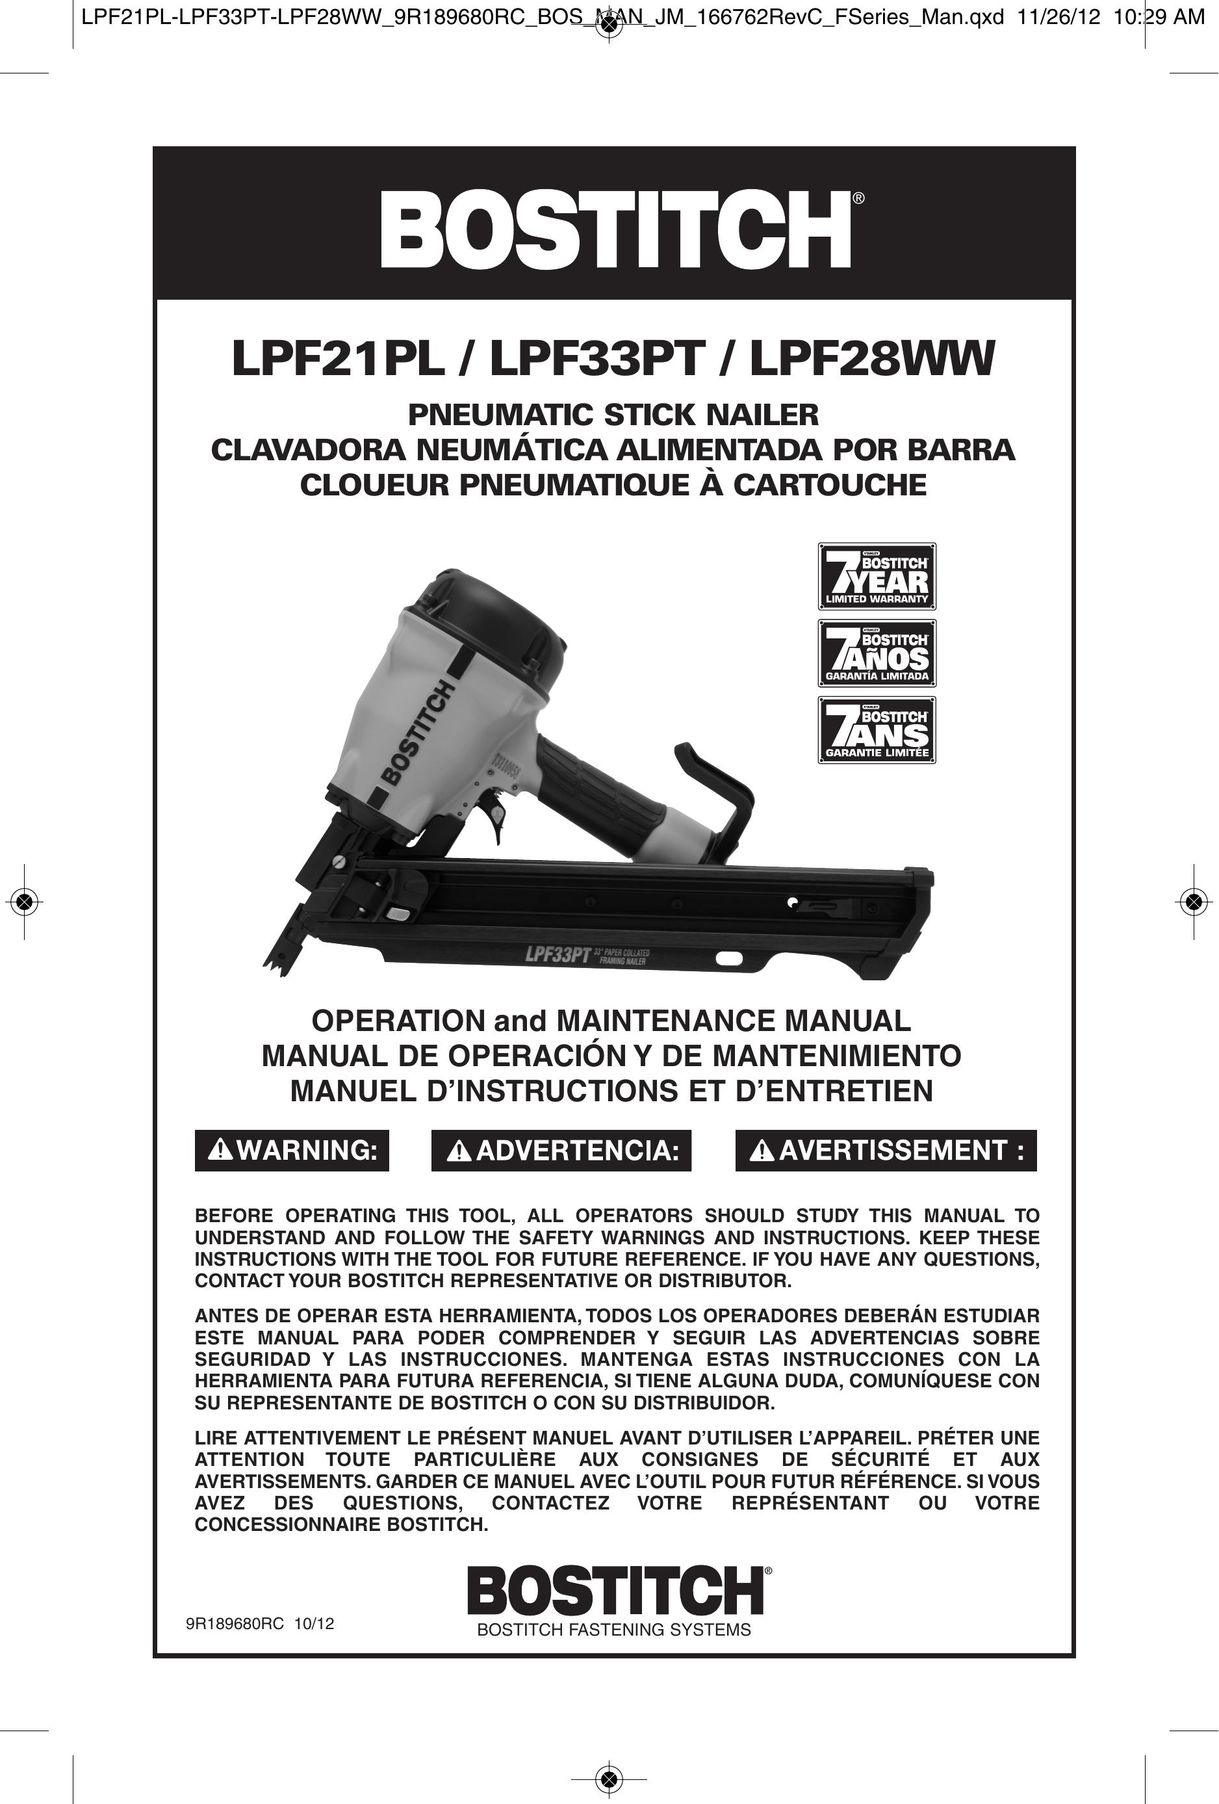 Bostitch LPF33PT Nail Gun User Manual